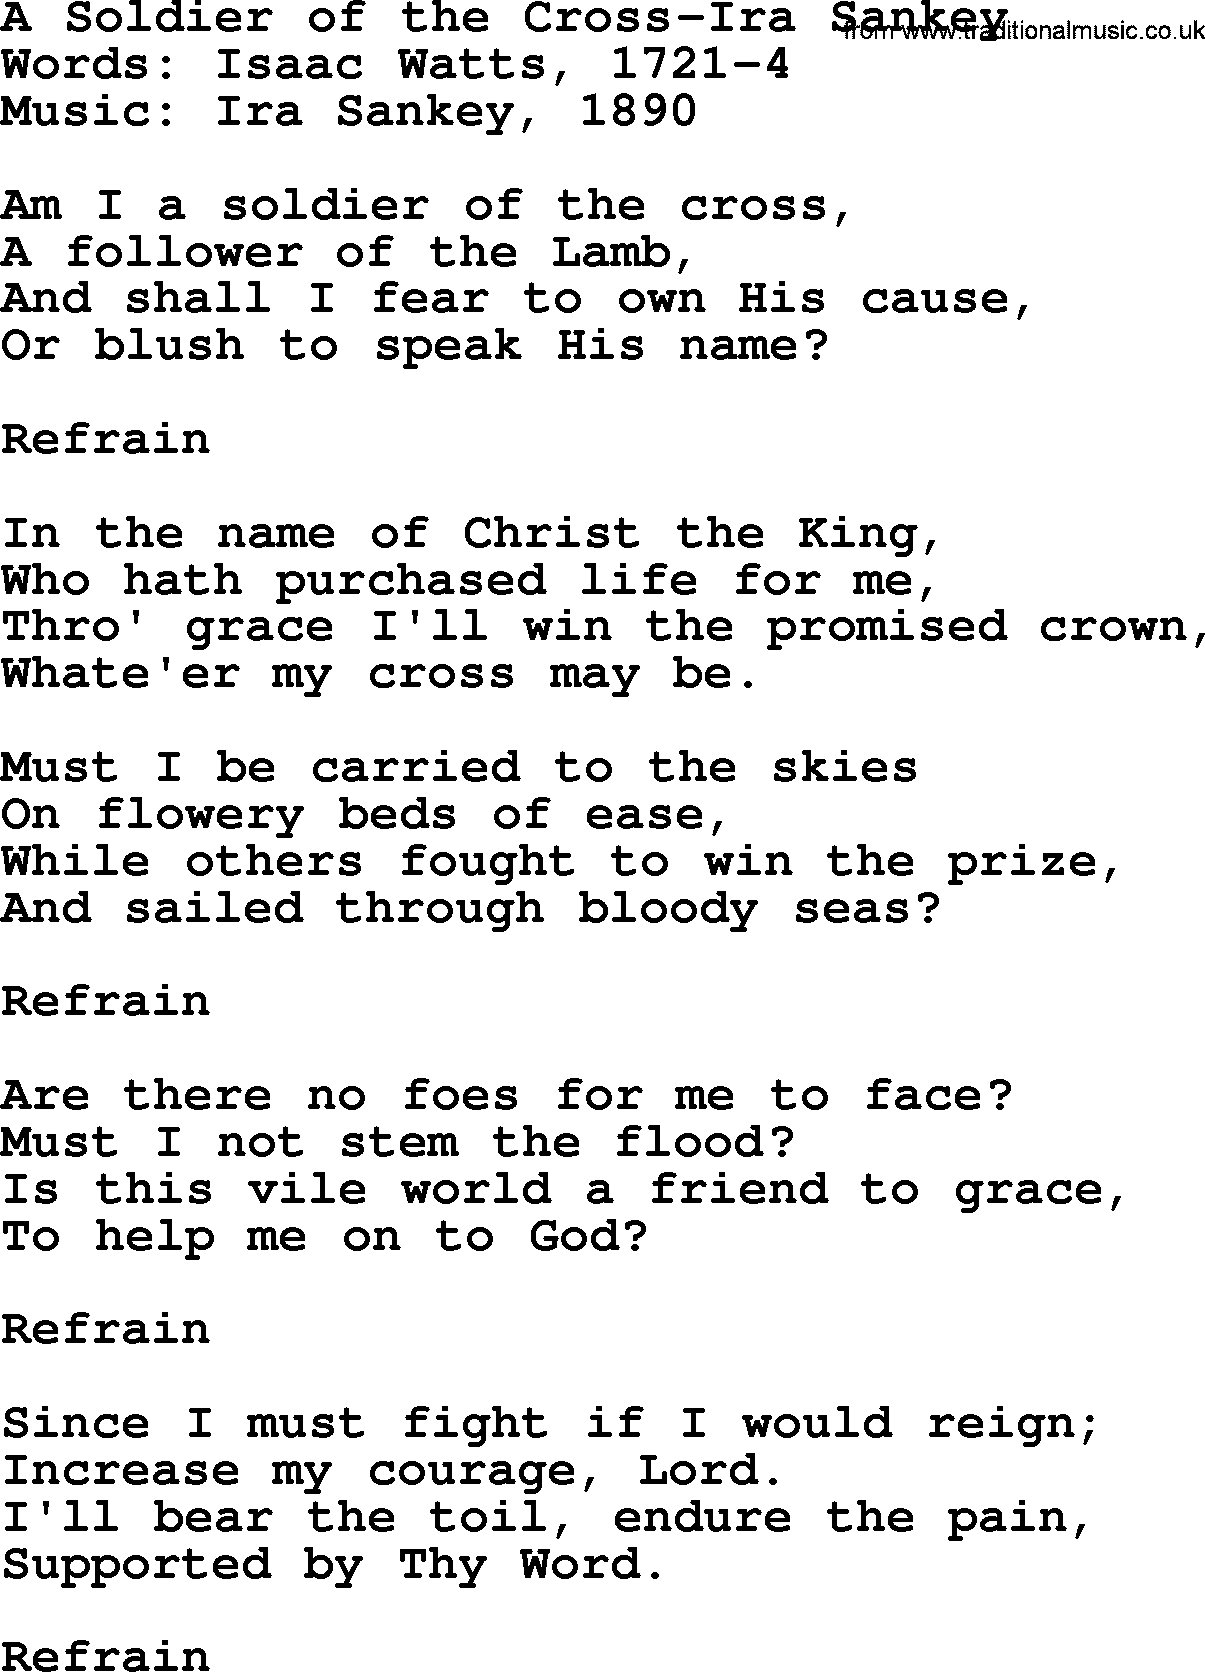 Ira Sankey hymn: A Soldier of the Cross-Ira Sankey, lyrics